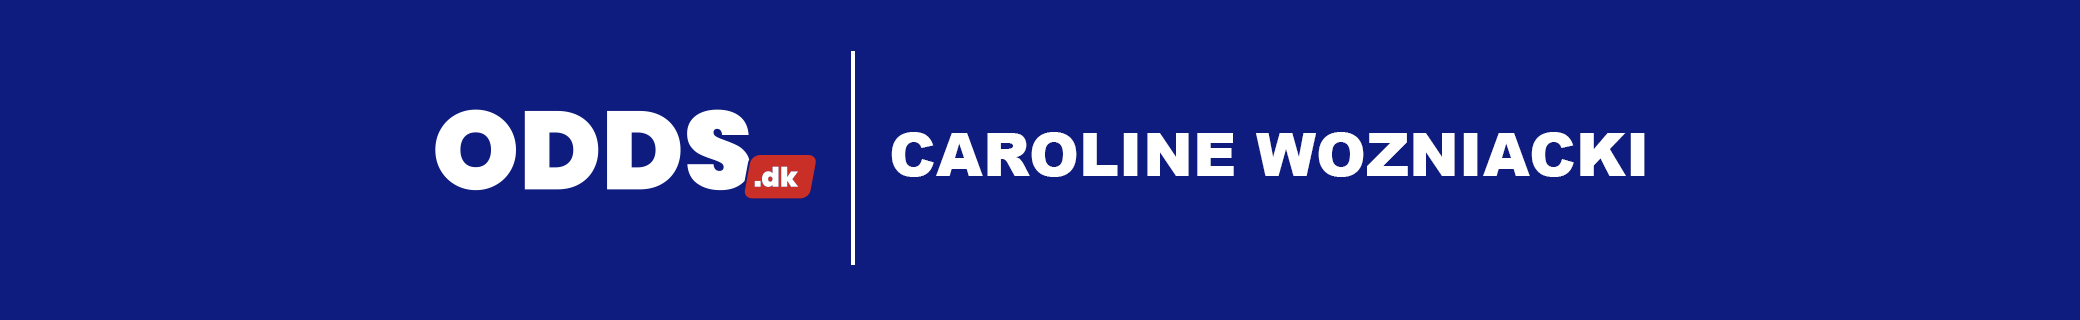 Caroline Wozniacki: Streaming & TV